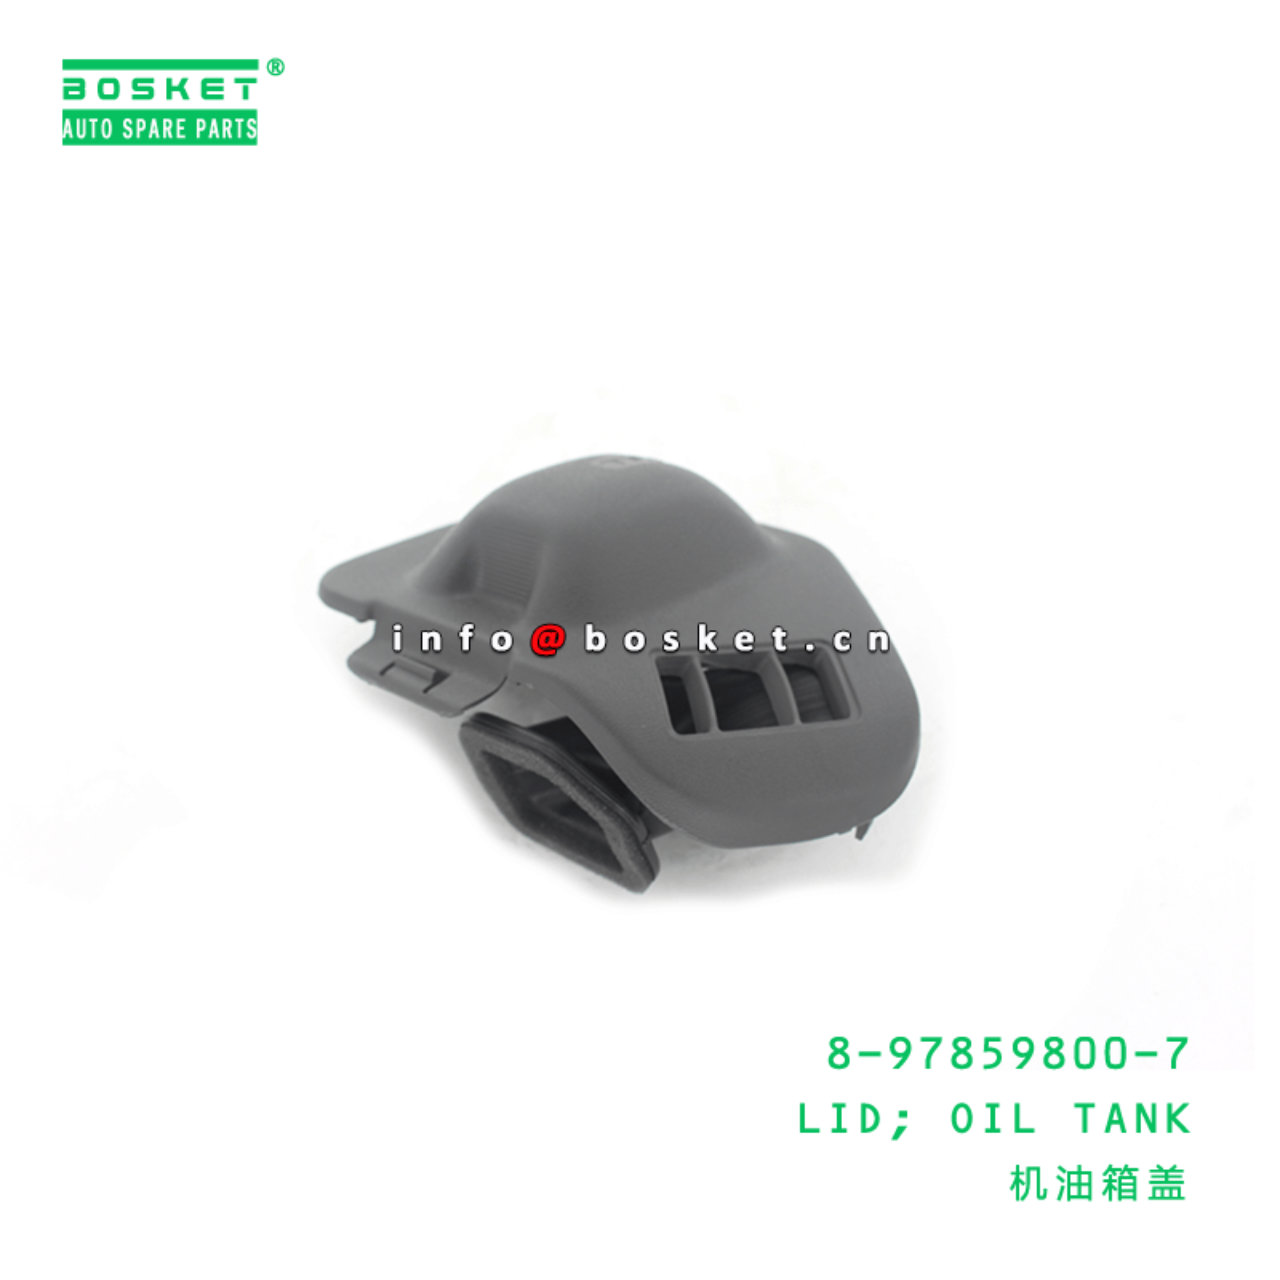 8-97859800-7 Oil Tank Lid 8978598007 Suitable for ISUZU NKR